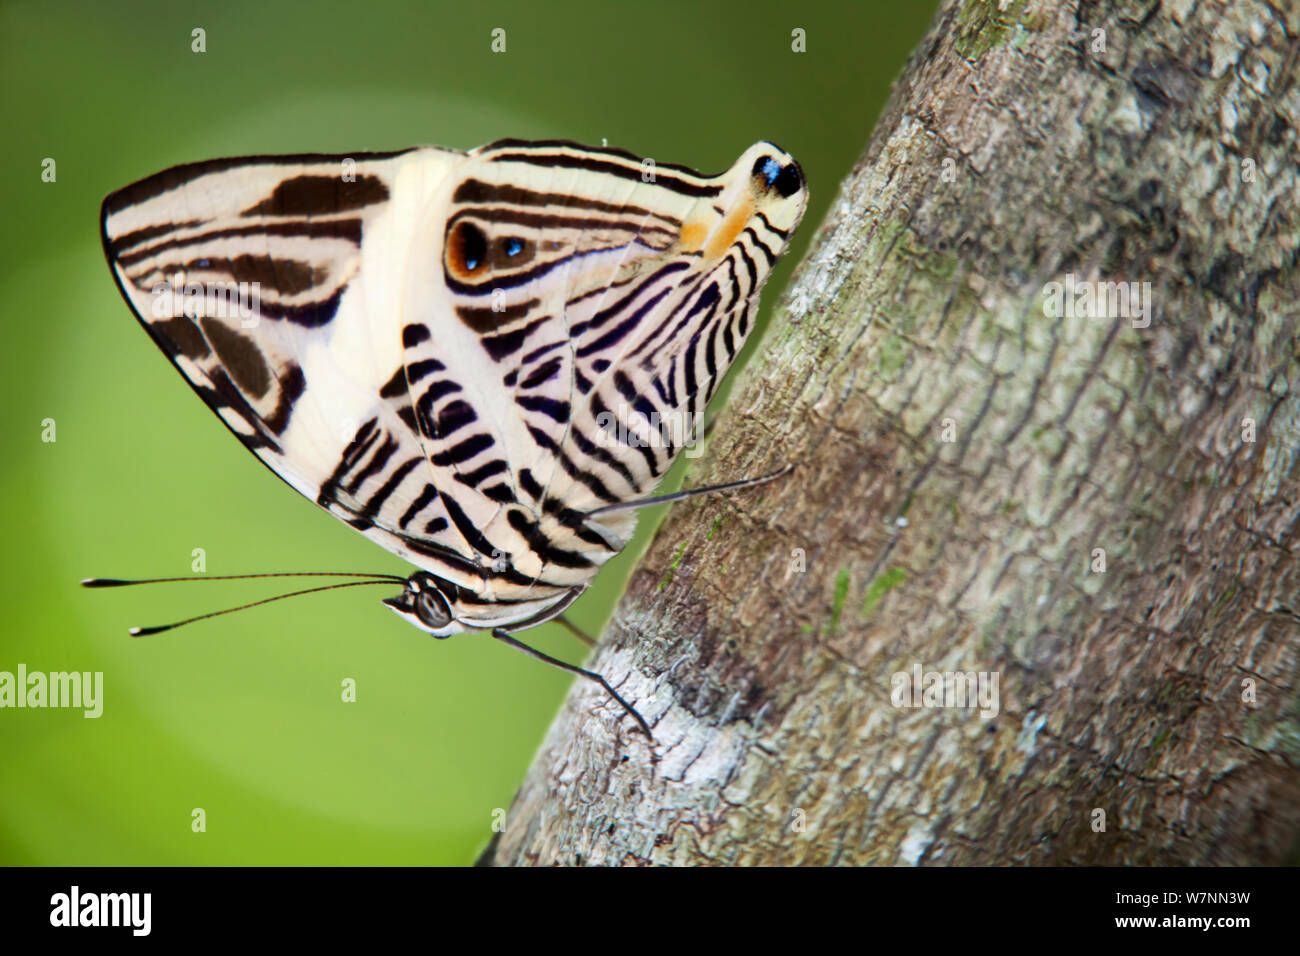 Zebra Mosaik Schmetterling (Colobura dirce), El Mirador - Rio Azul Nationalpark, Abteilung für Peten, Guatemala, Oktober. Stockfoto